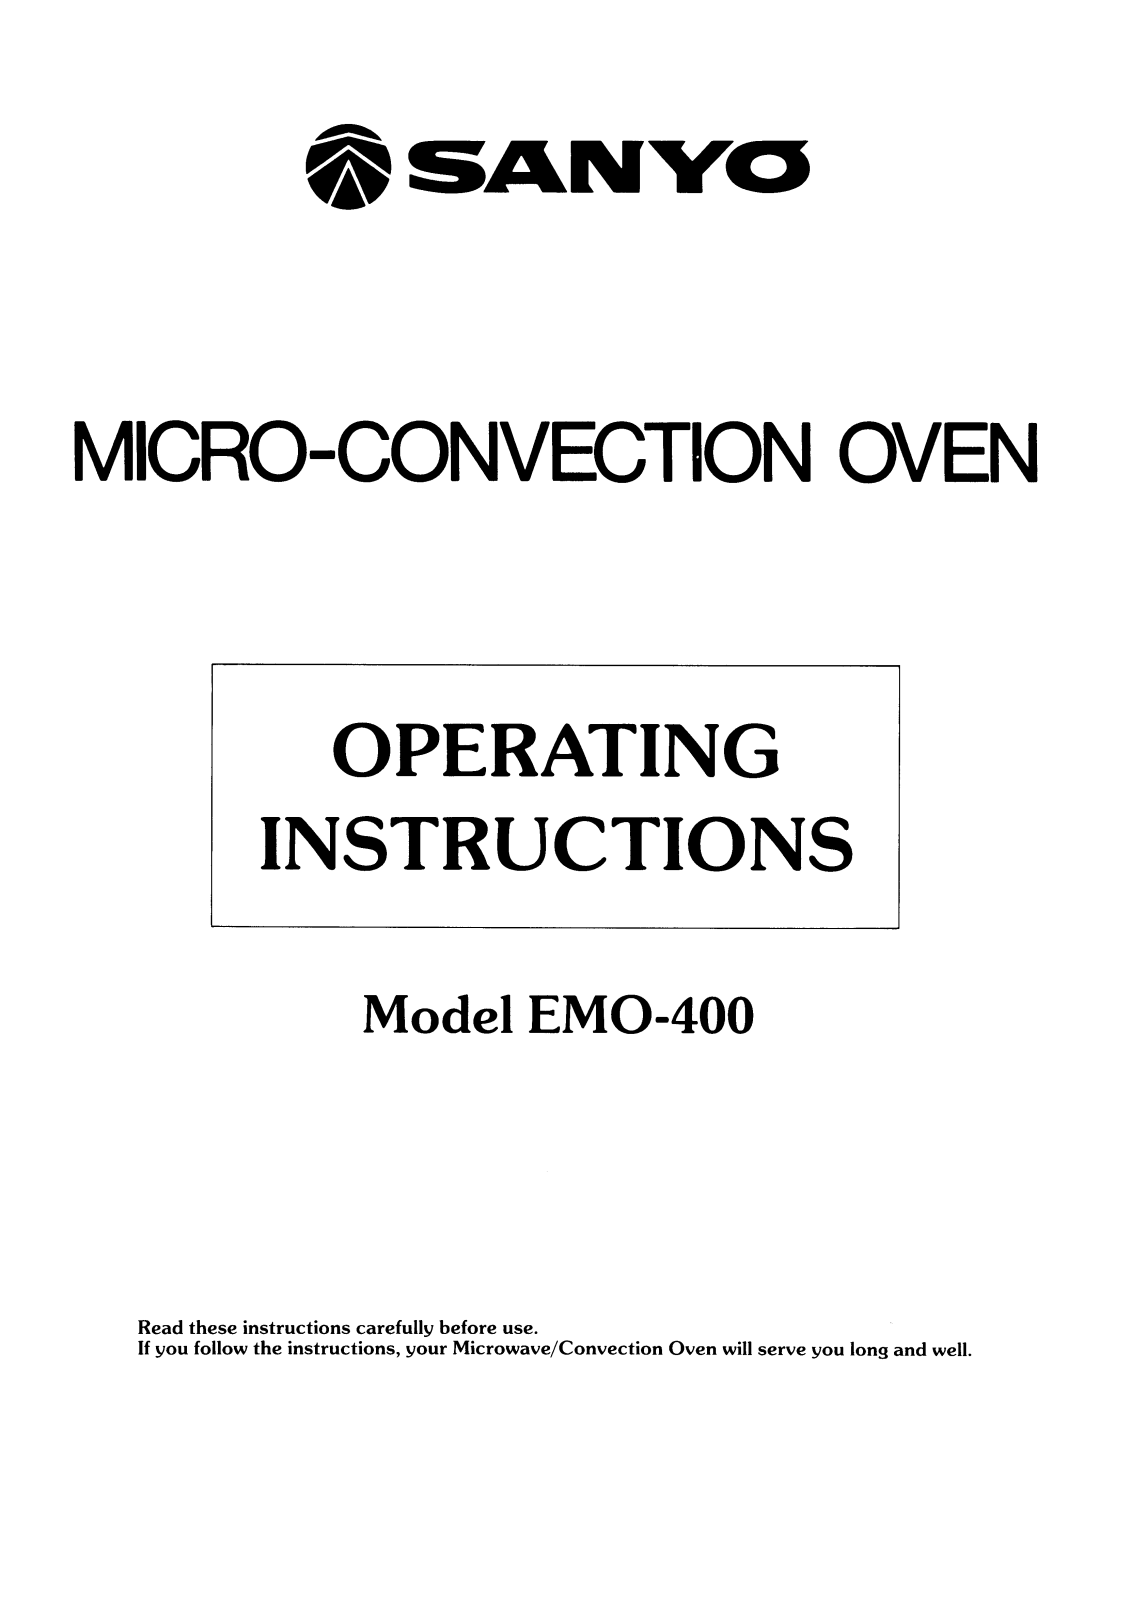 Sanyo EMO-400 Instruction Manual